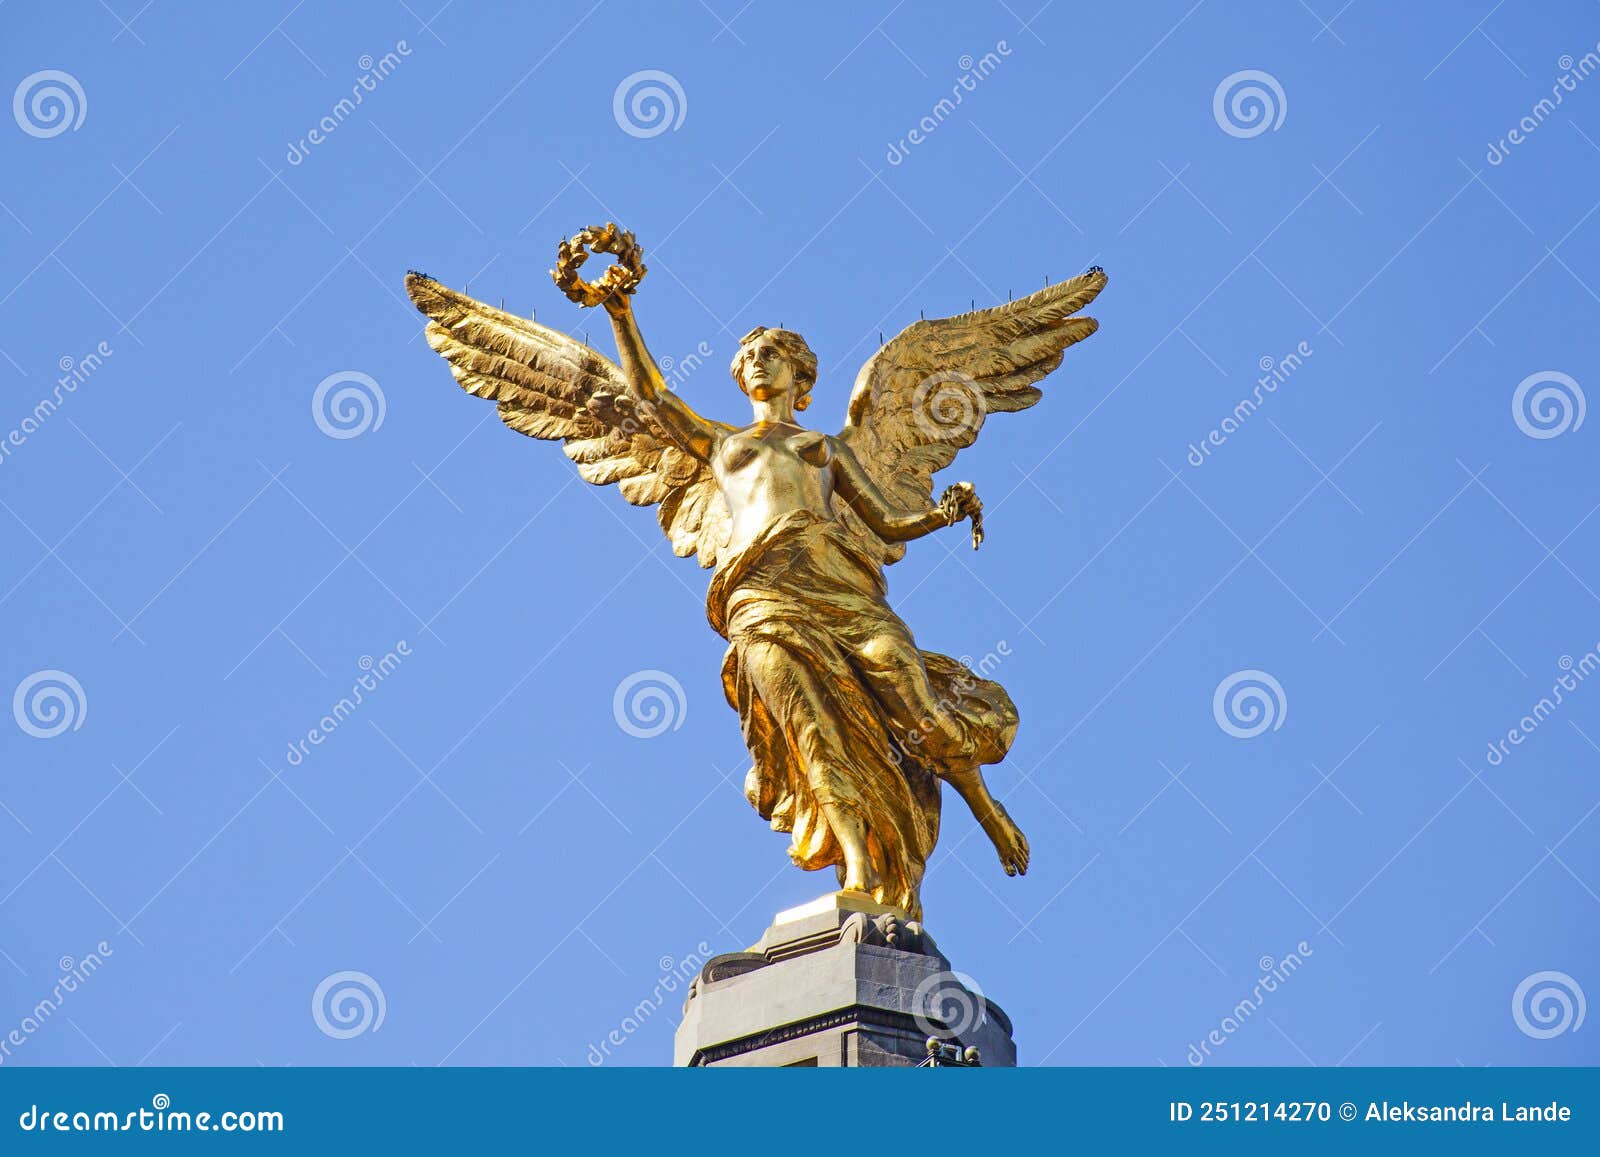 independence angel statue located in paseo de la reforma avenue.